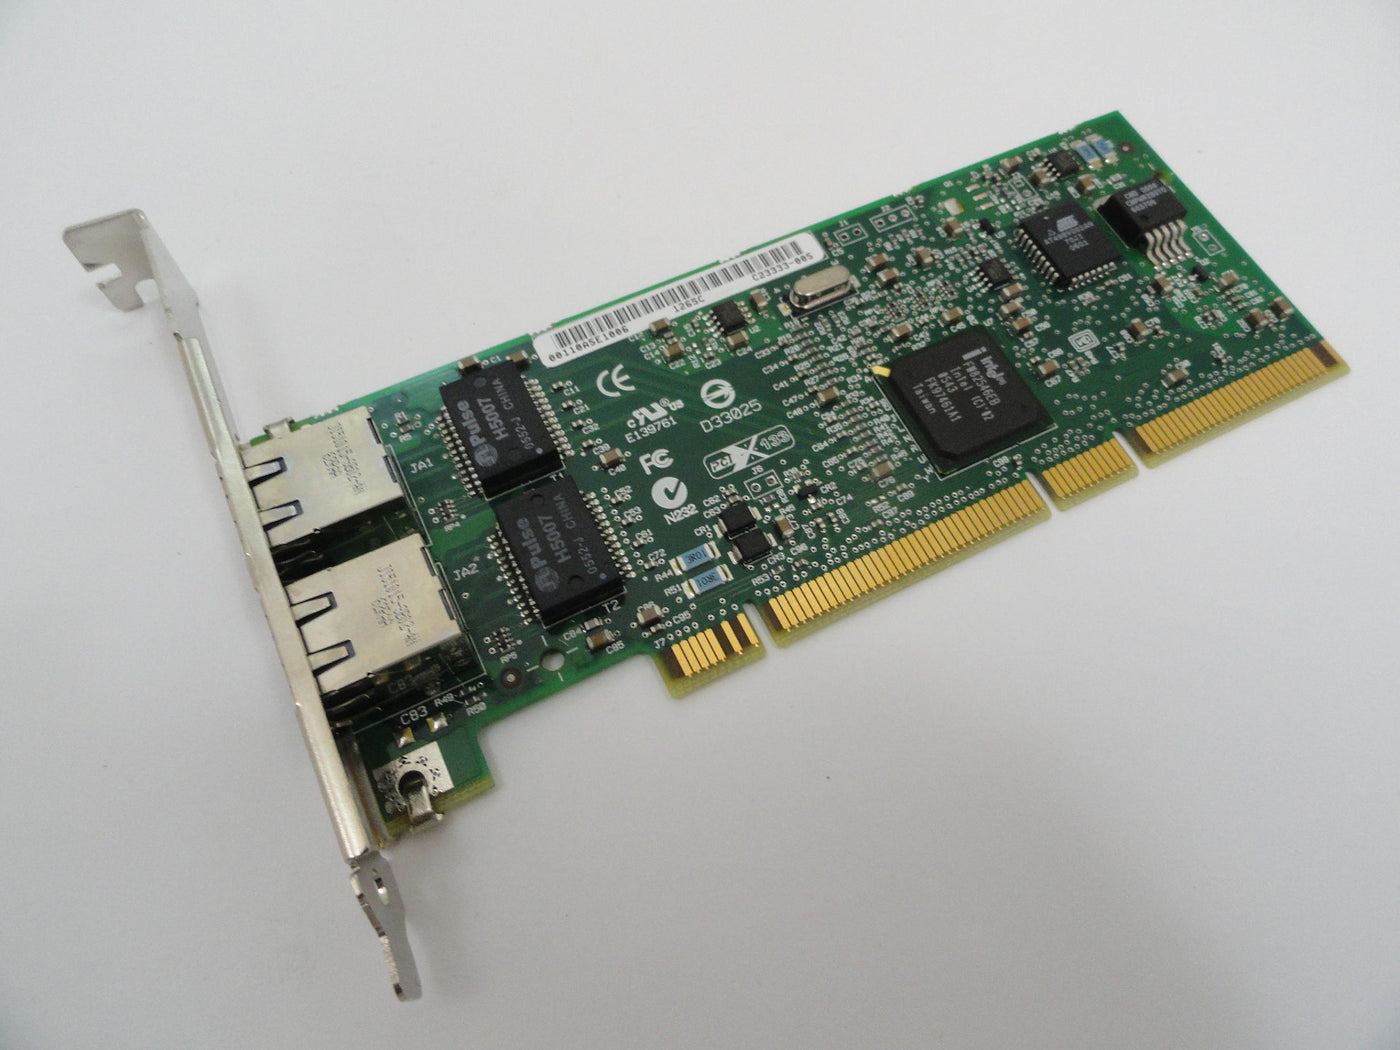 PR16586_C23333-005_HP PCI Dual Port Ethernet NIC - Image3